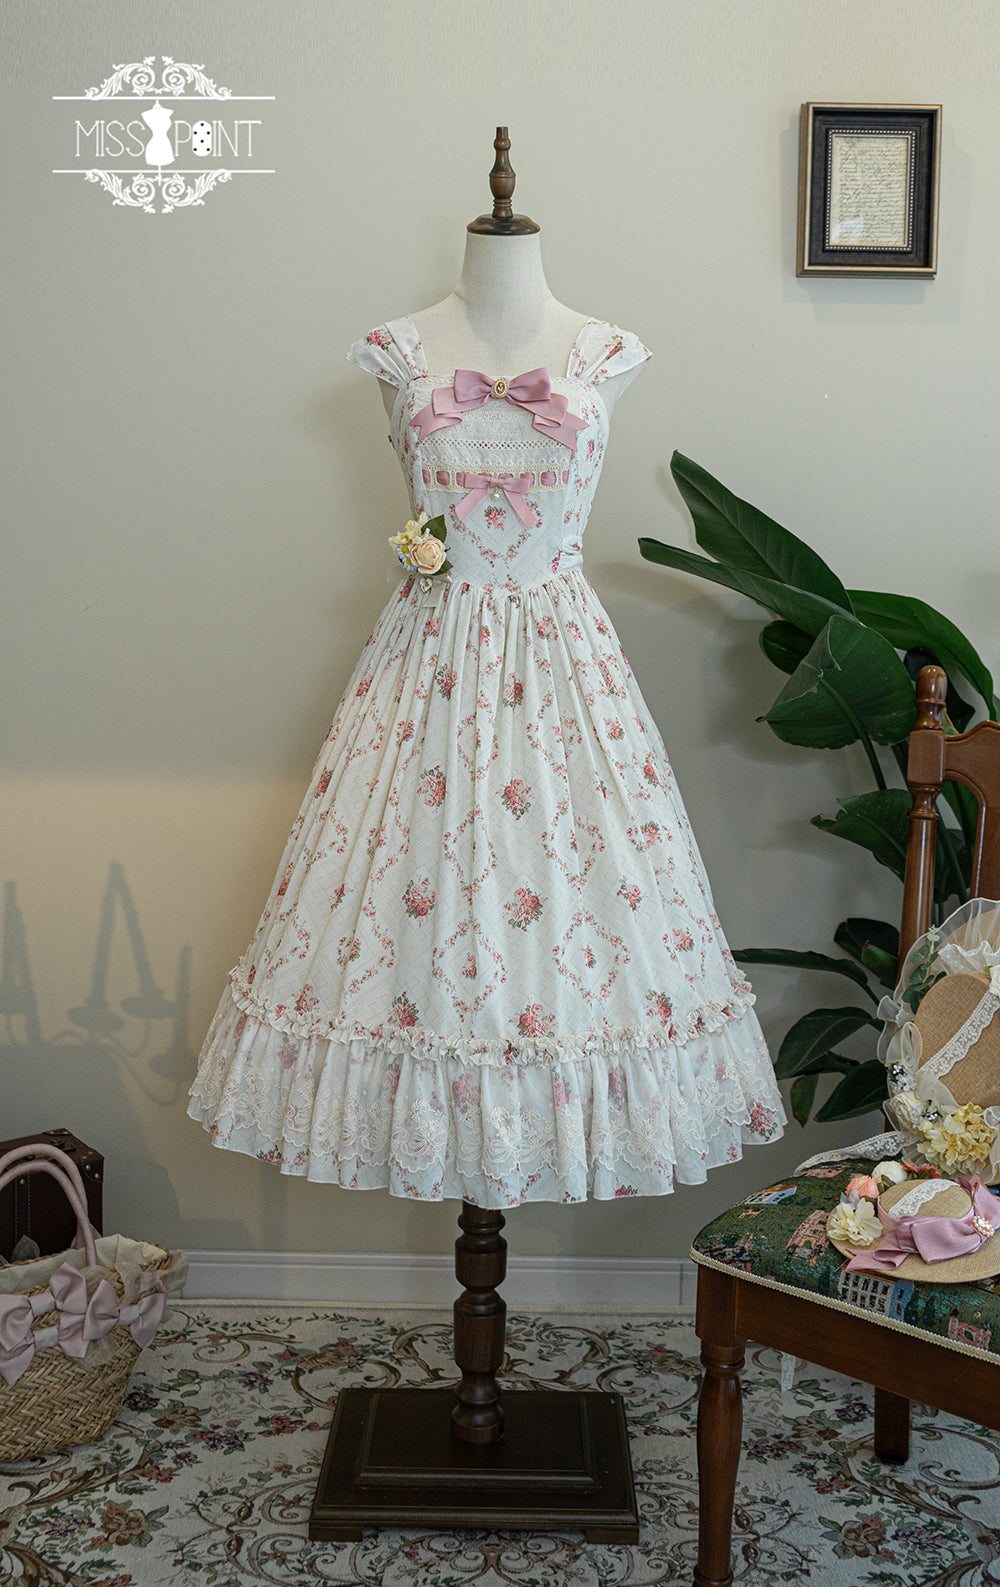 Miss Point~Customized Wood Rose 2.0 Elegant Vintage Jumper Skirt XS pink 